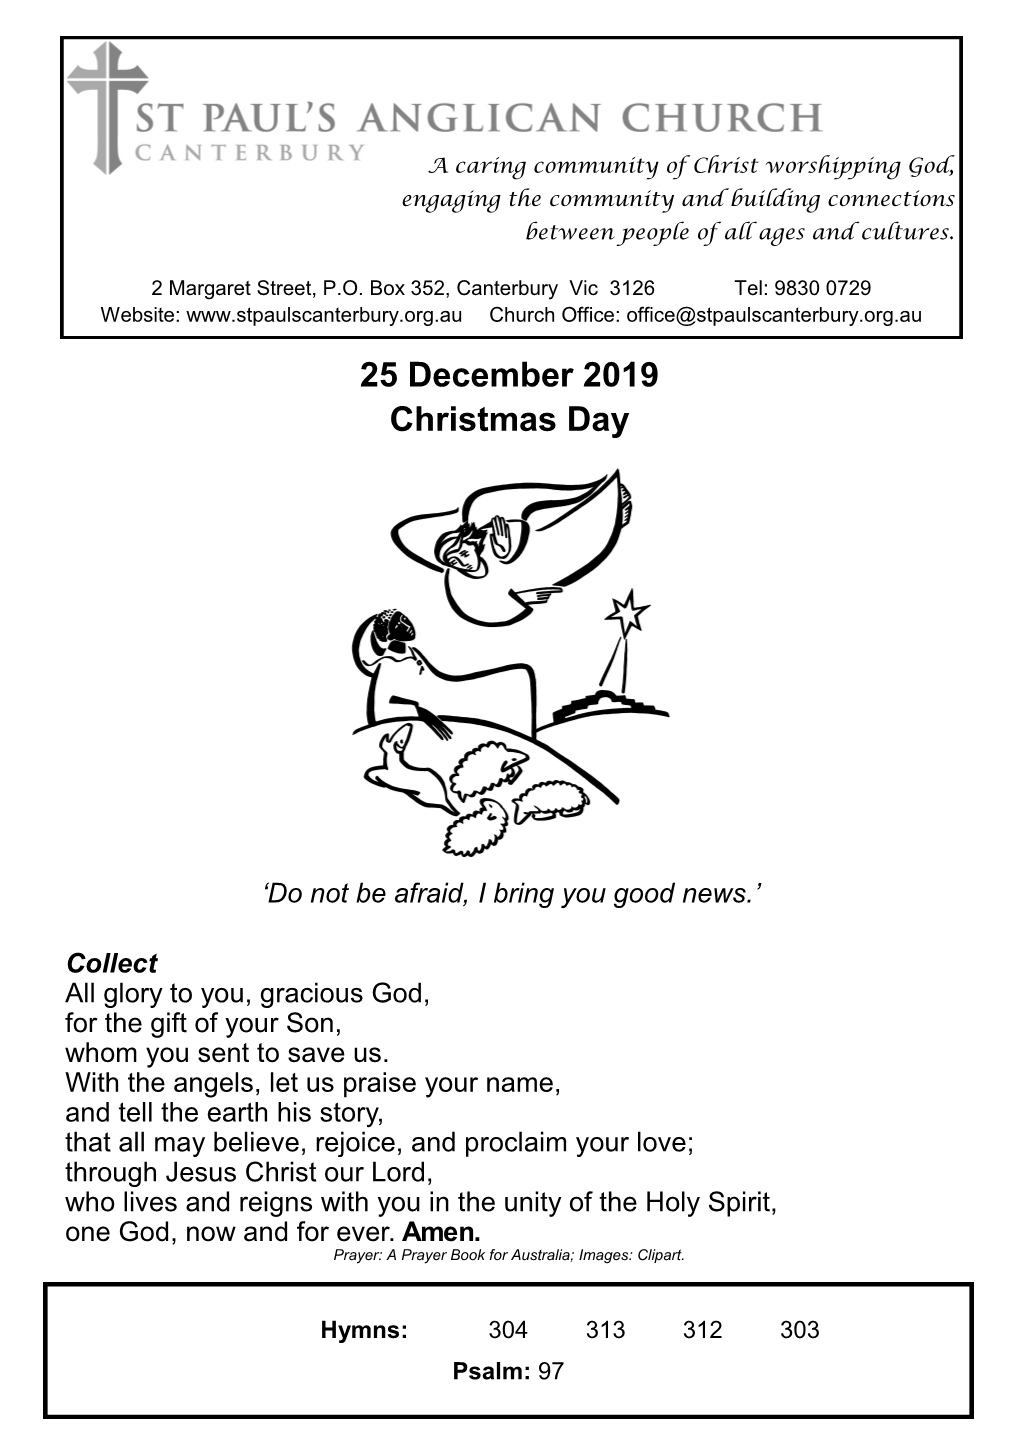 25 December 2019 Christmas Day